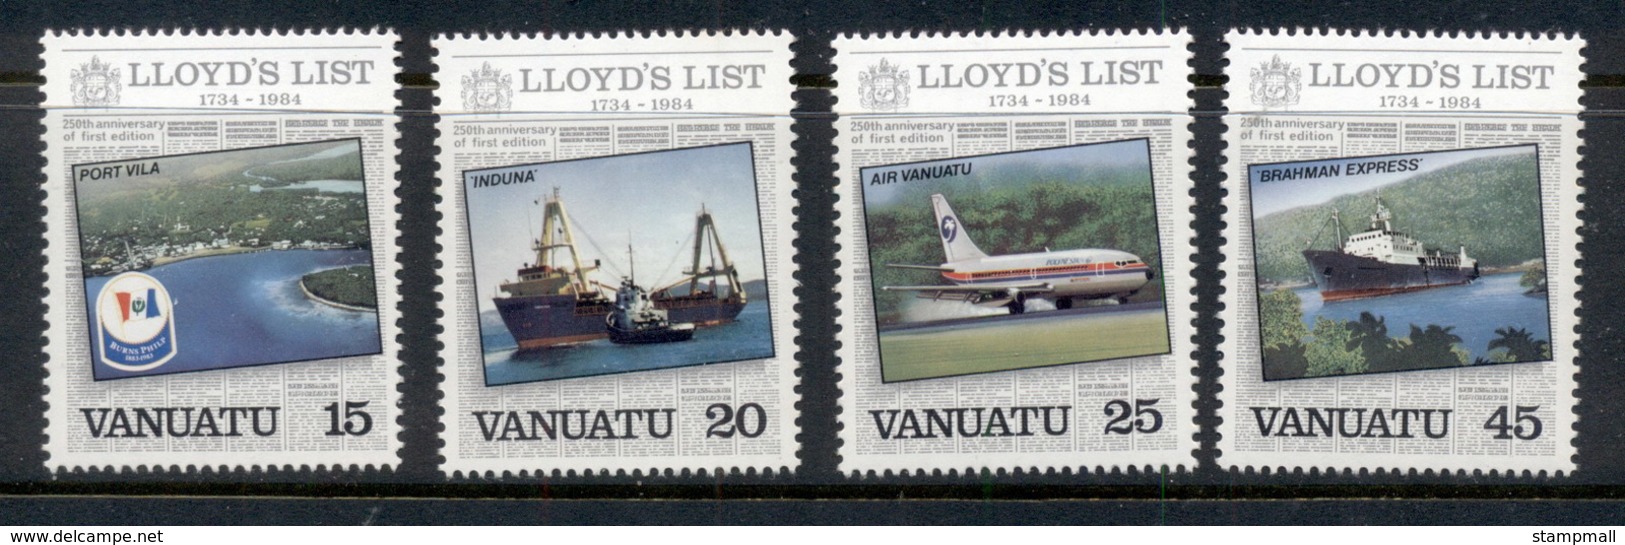 Vanuatu 1984 Lloyd's List Ships MUH - Vanuatu (1980-...)